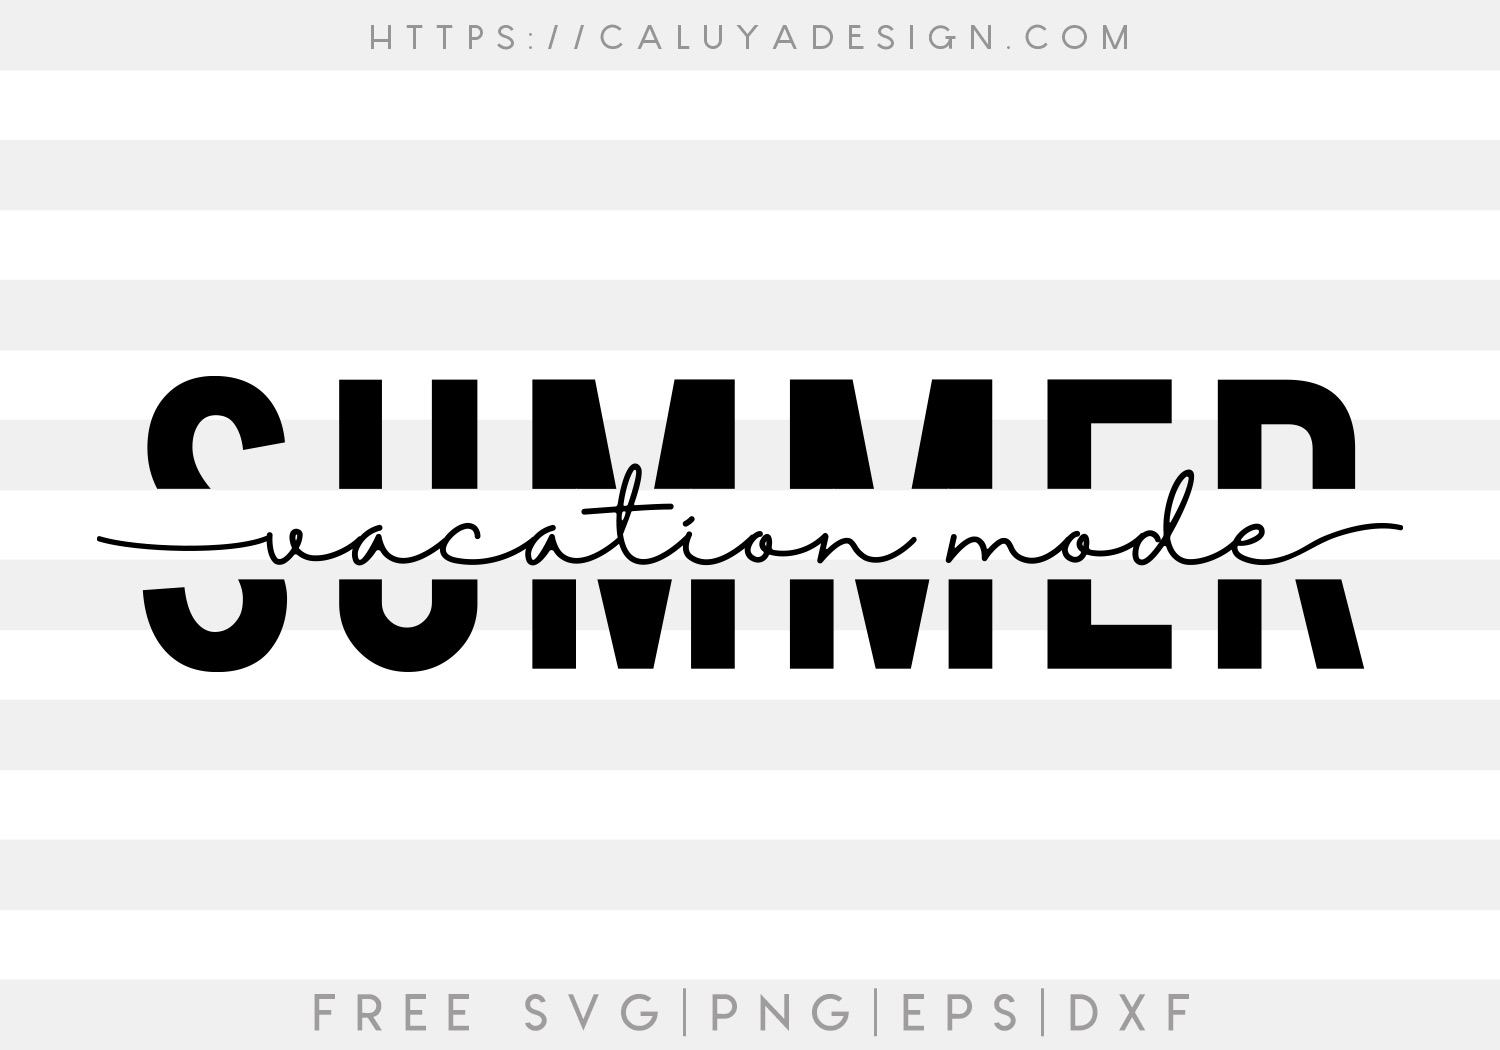 Free Summer Vacation Mode SVG